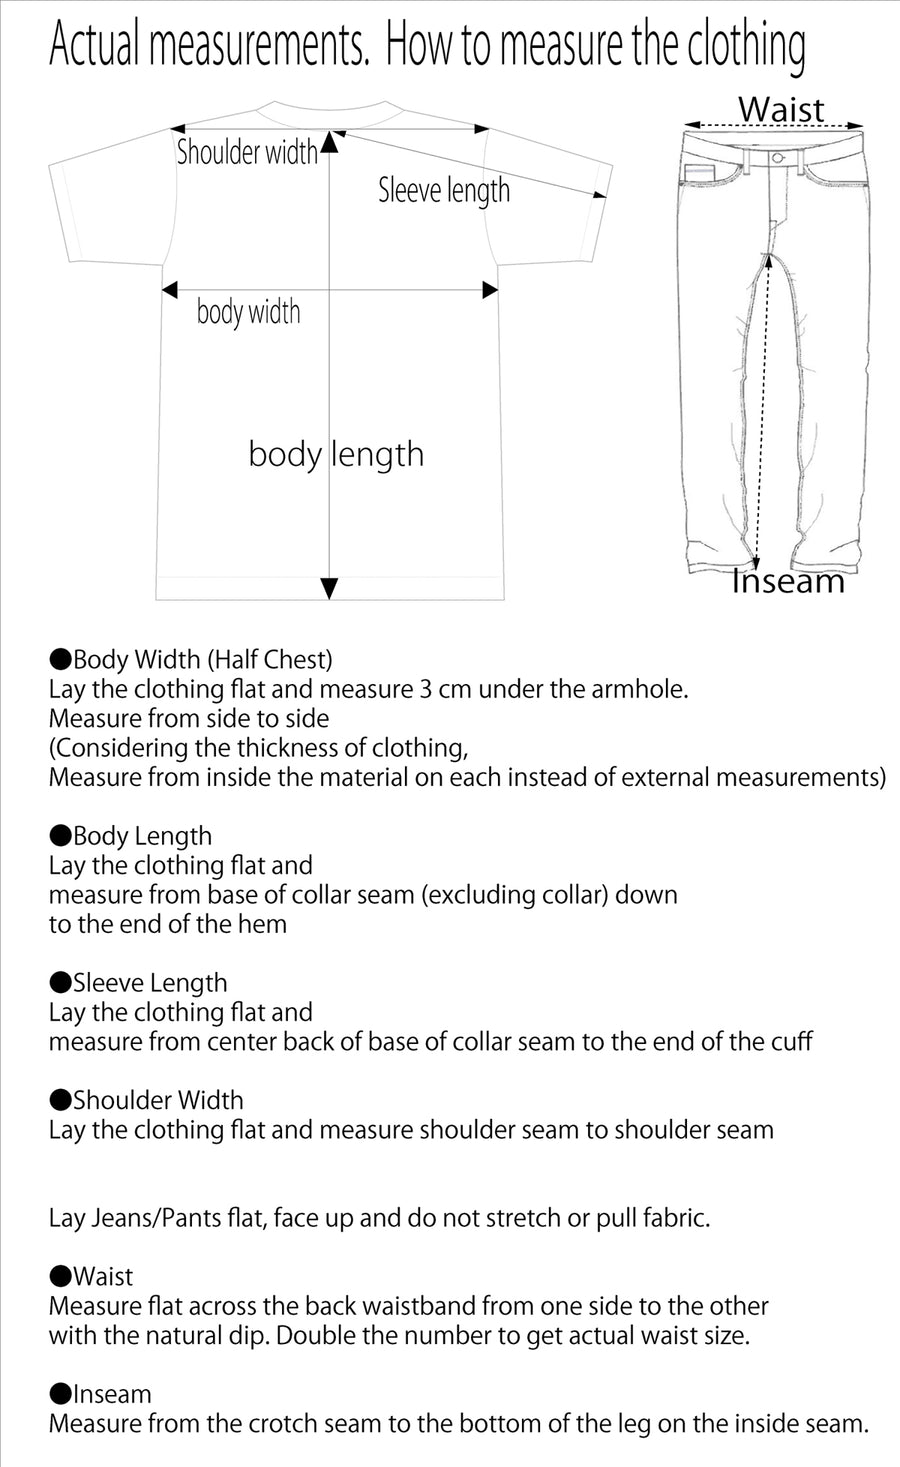 Tedman 3 Pocket T-Shirt Men's Short Sleeve Graphic Tee TDSS-470 Off/Navy-Blue